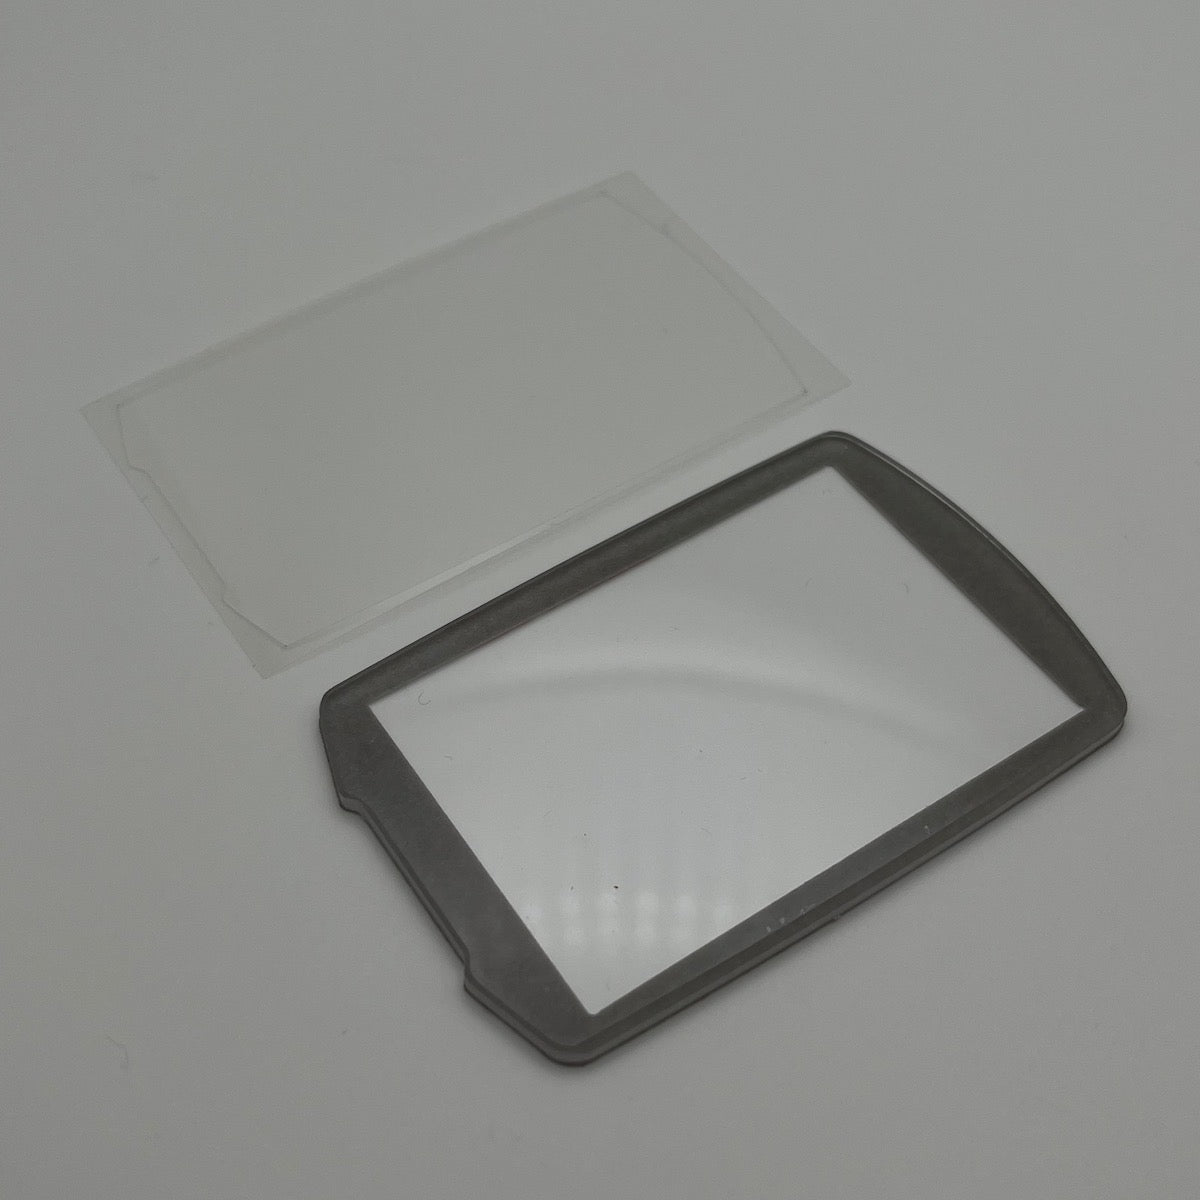 New Shock proof glass for Garmin Astro 320, 430, Alpha 50 2mm lens